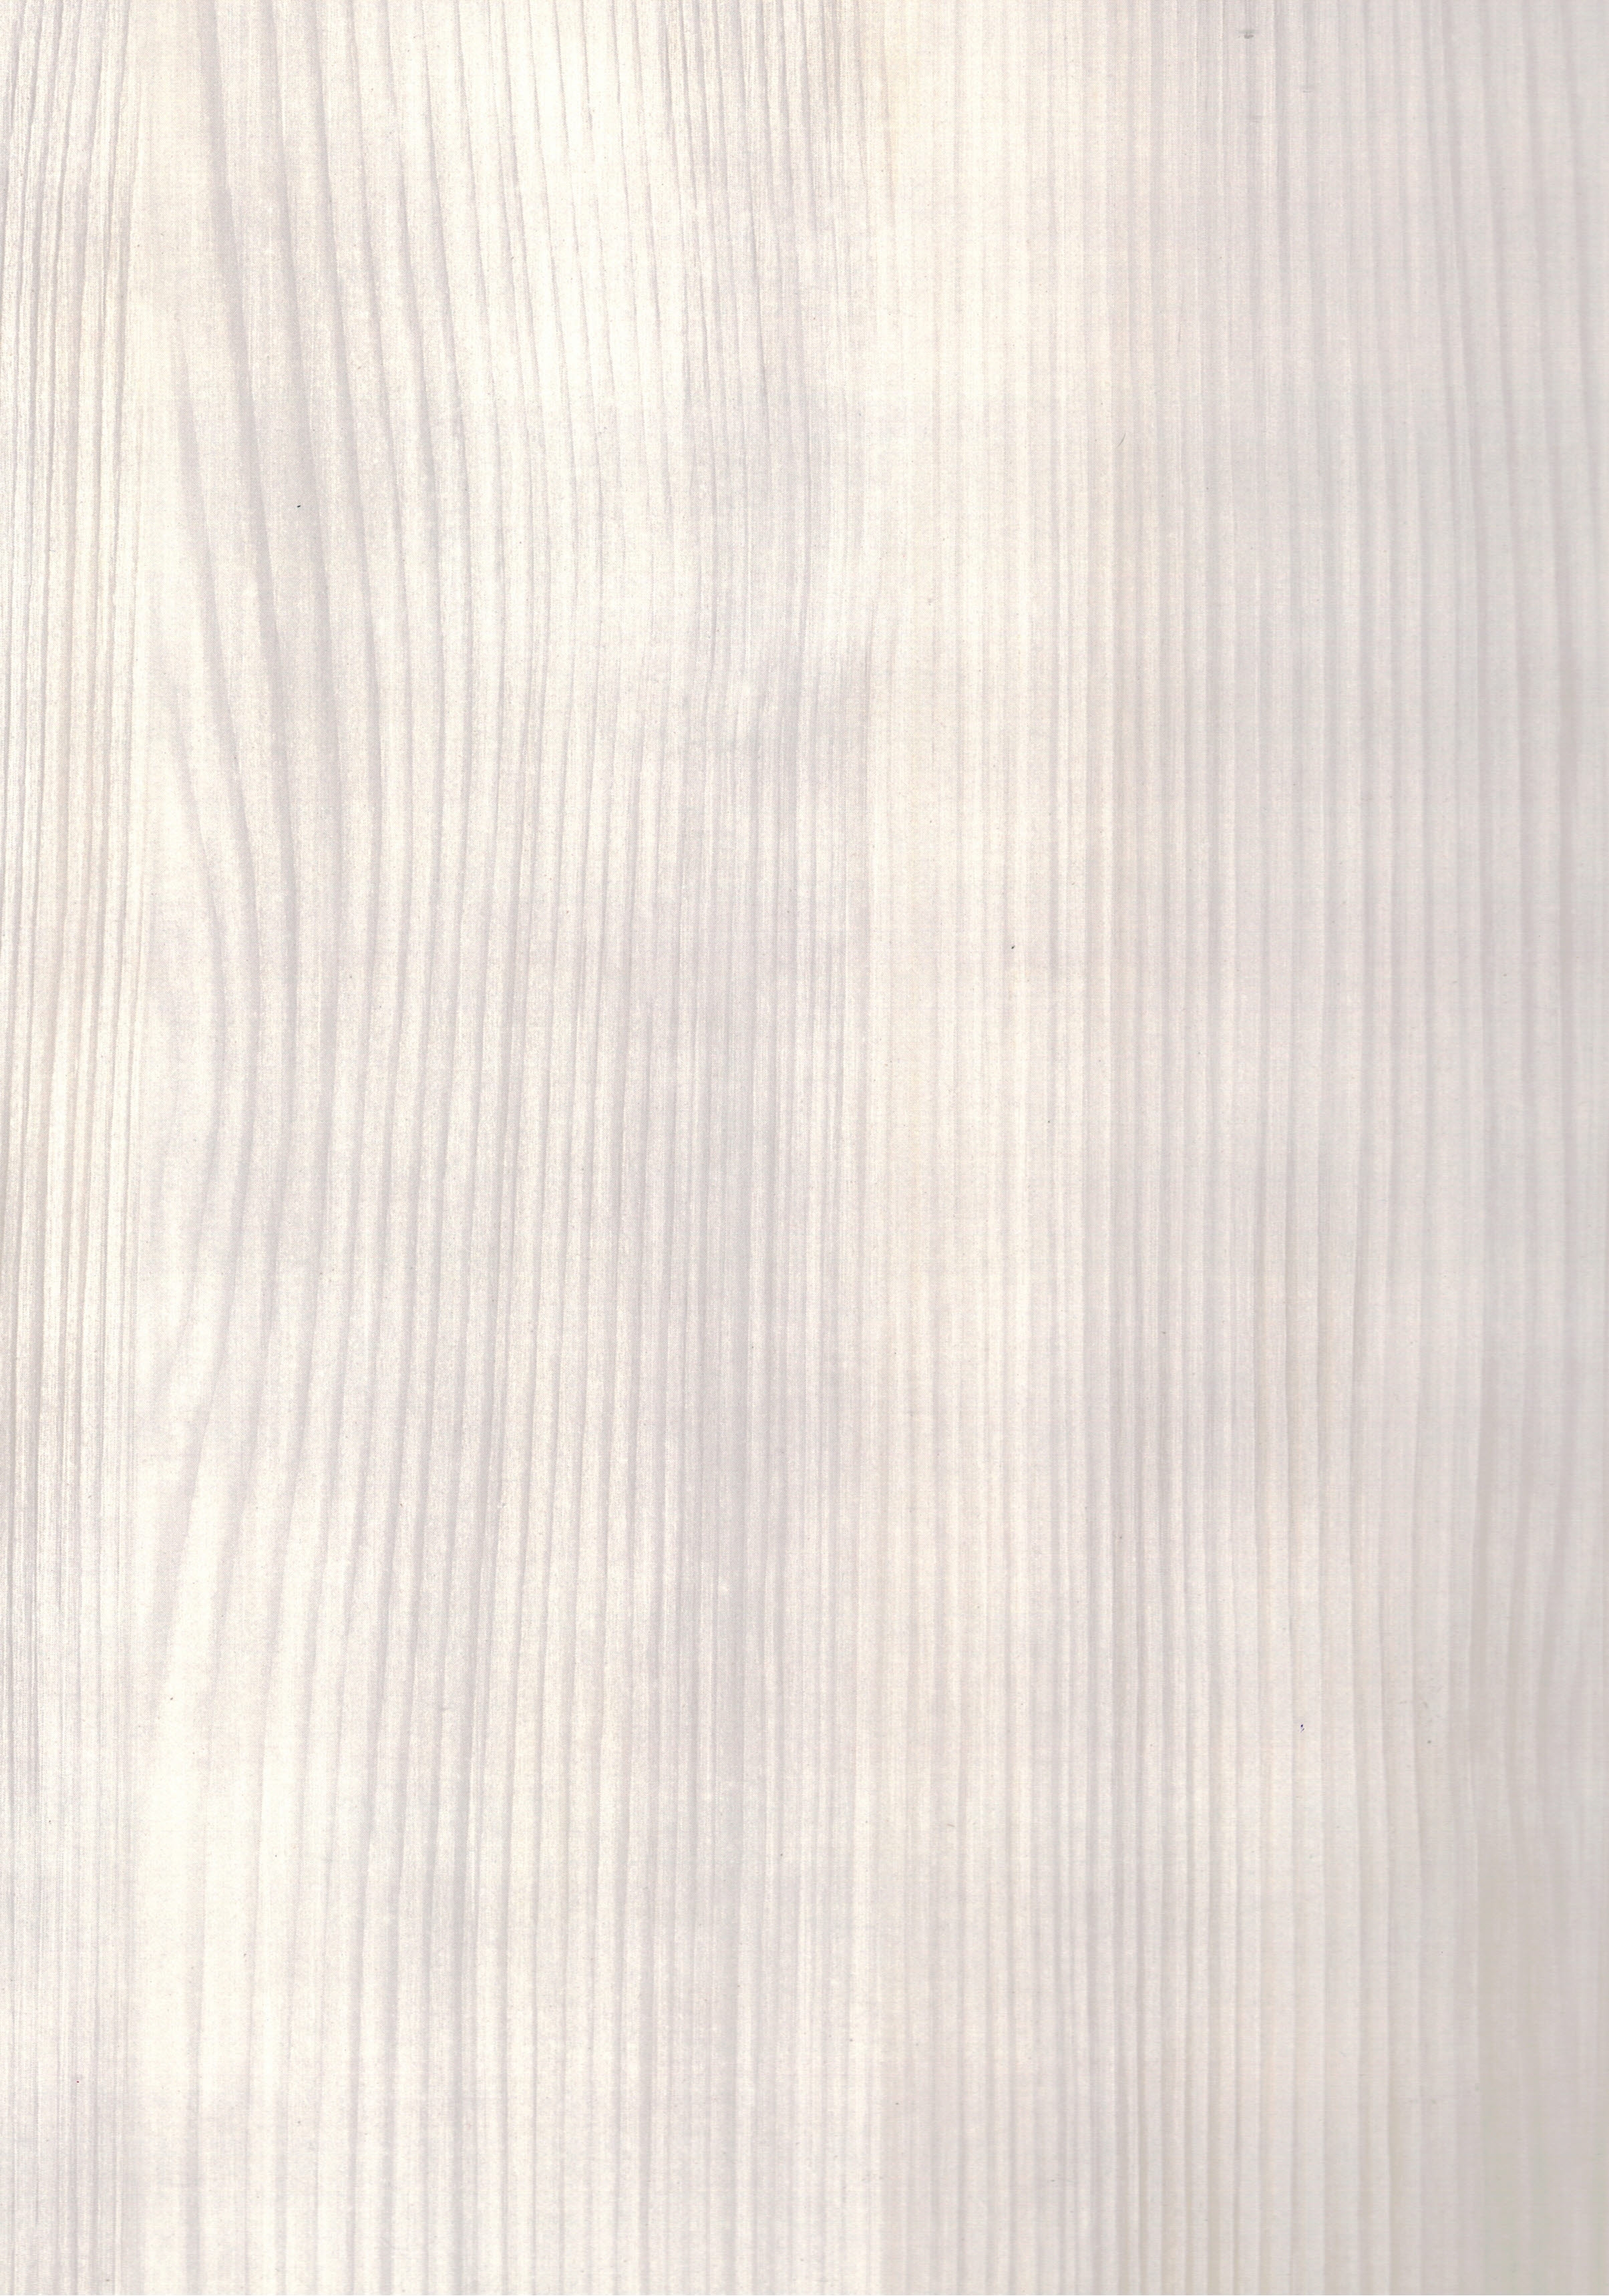 449 - Бяло Дърво